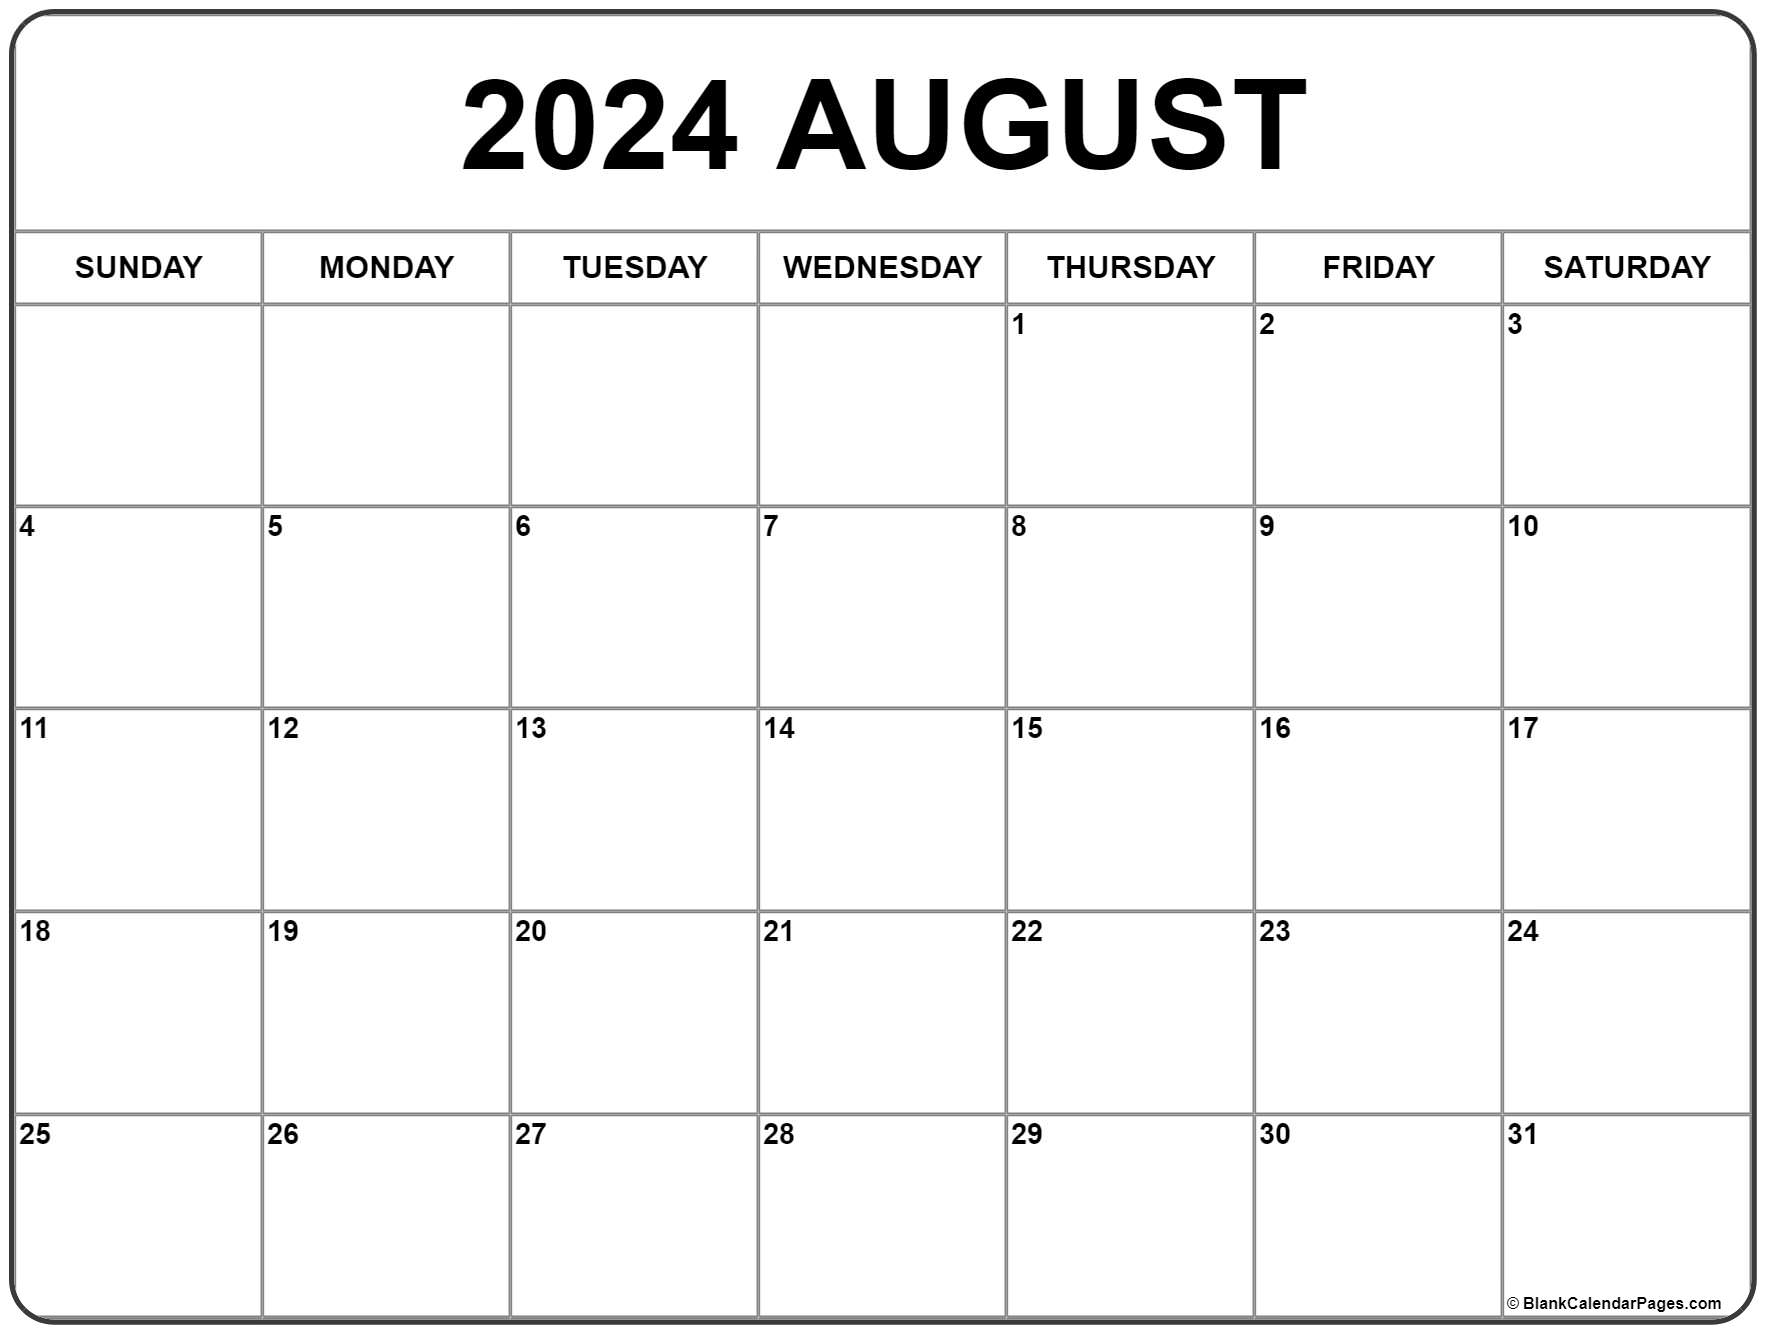 August 2021 Calendar With Holidays August 2021 calendar | free printable monthly calendars